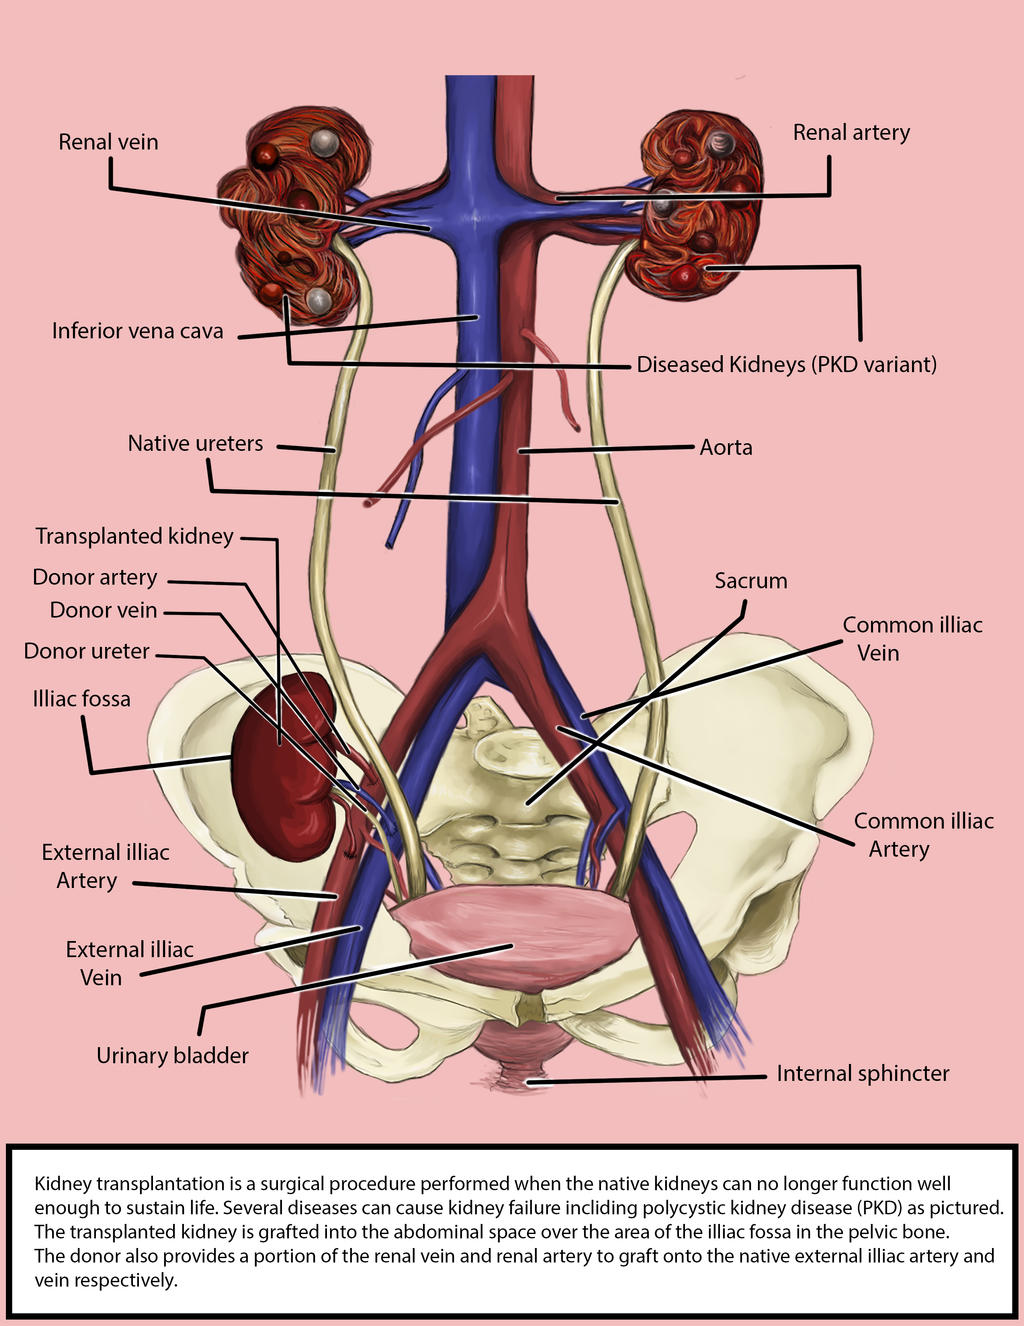 kidney-transplantation-diagram-by-traveling-adventurer-on-deviantart